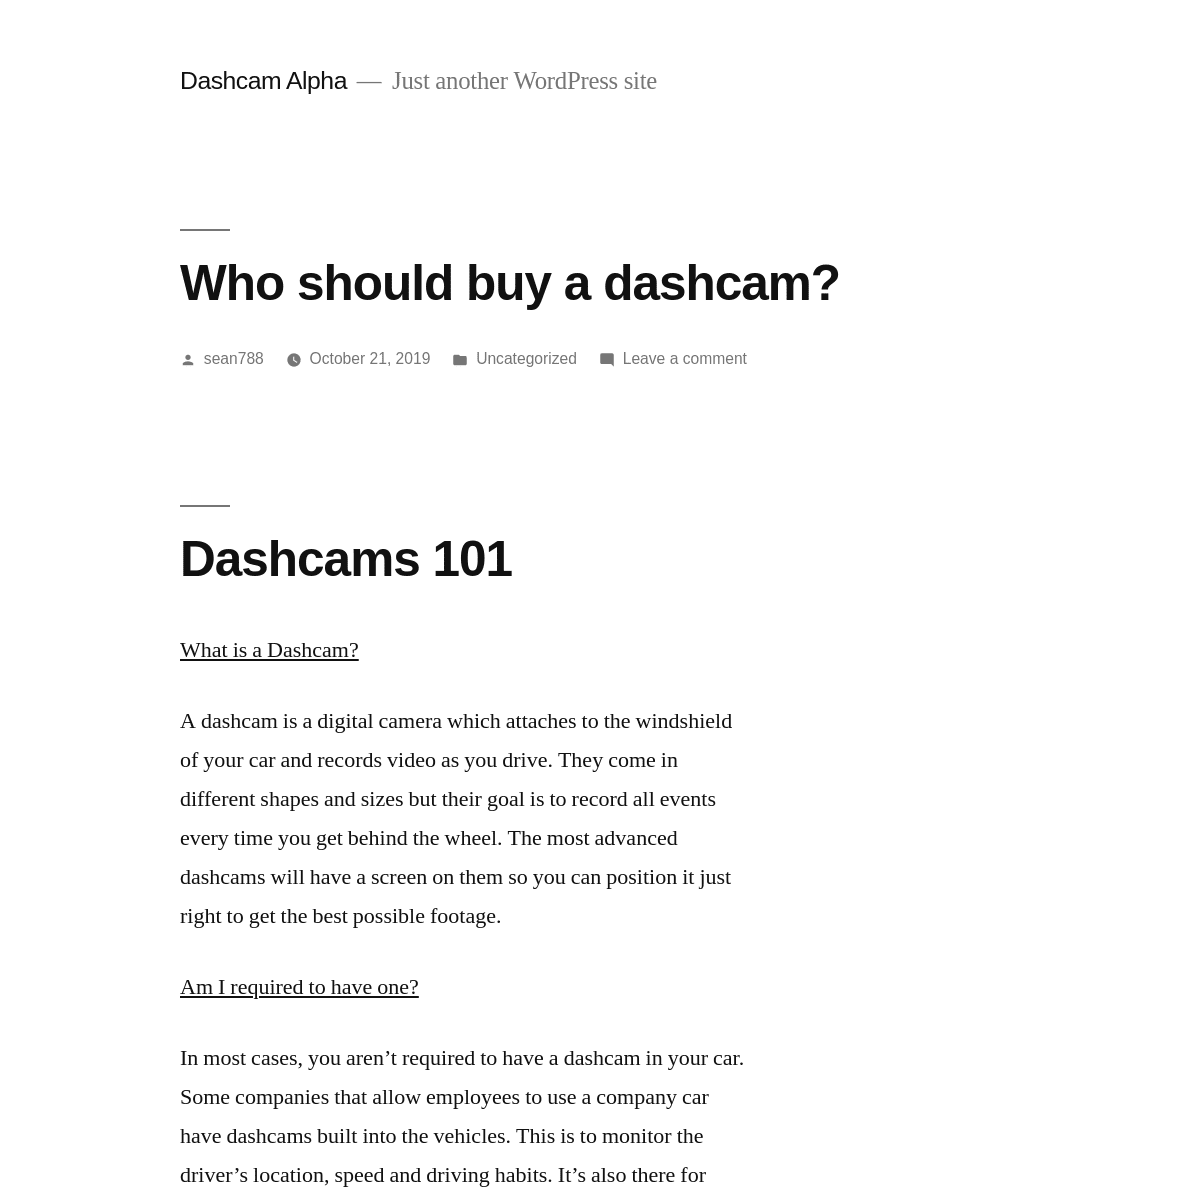 A complete backup of https://dashcamalpha.com